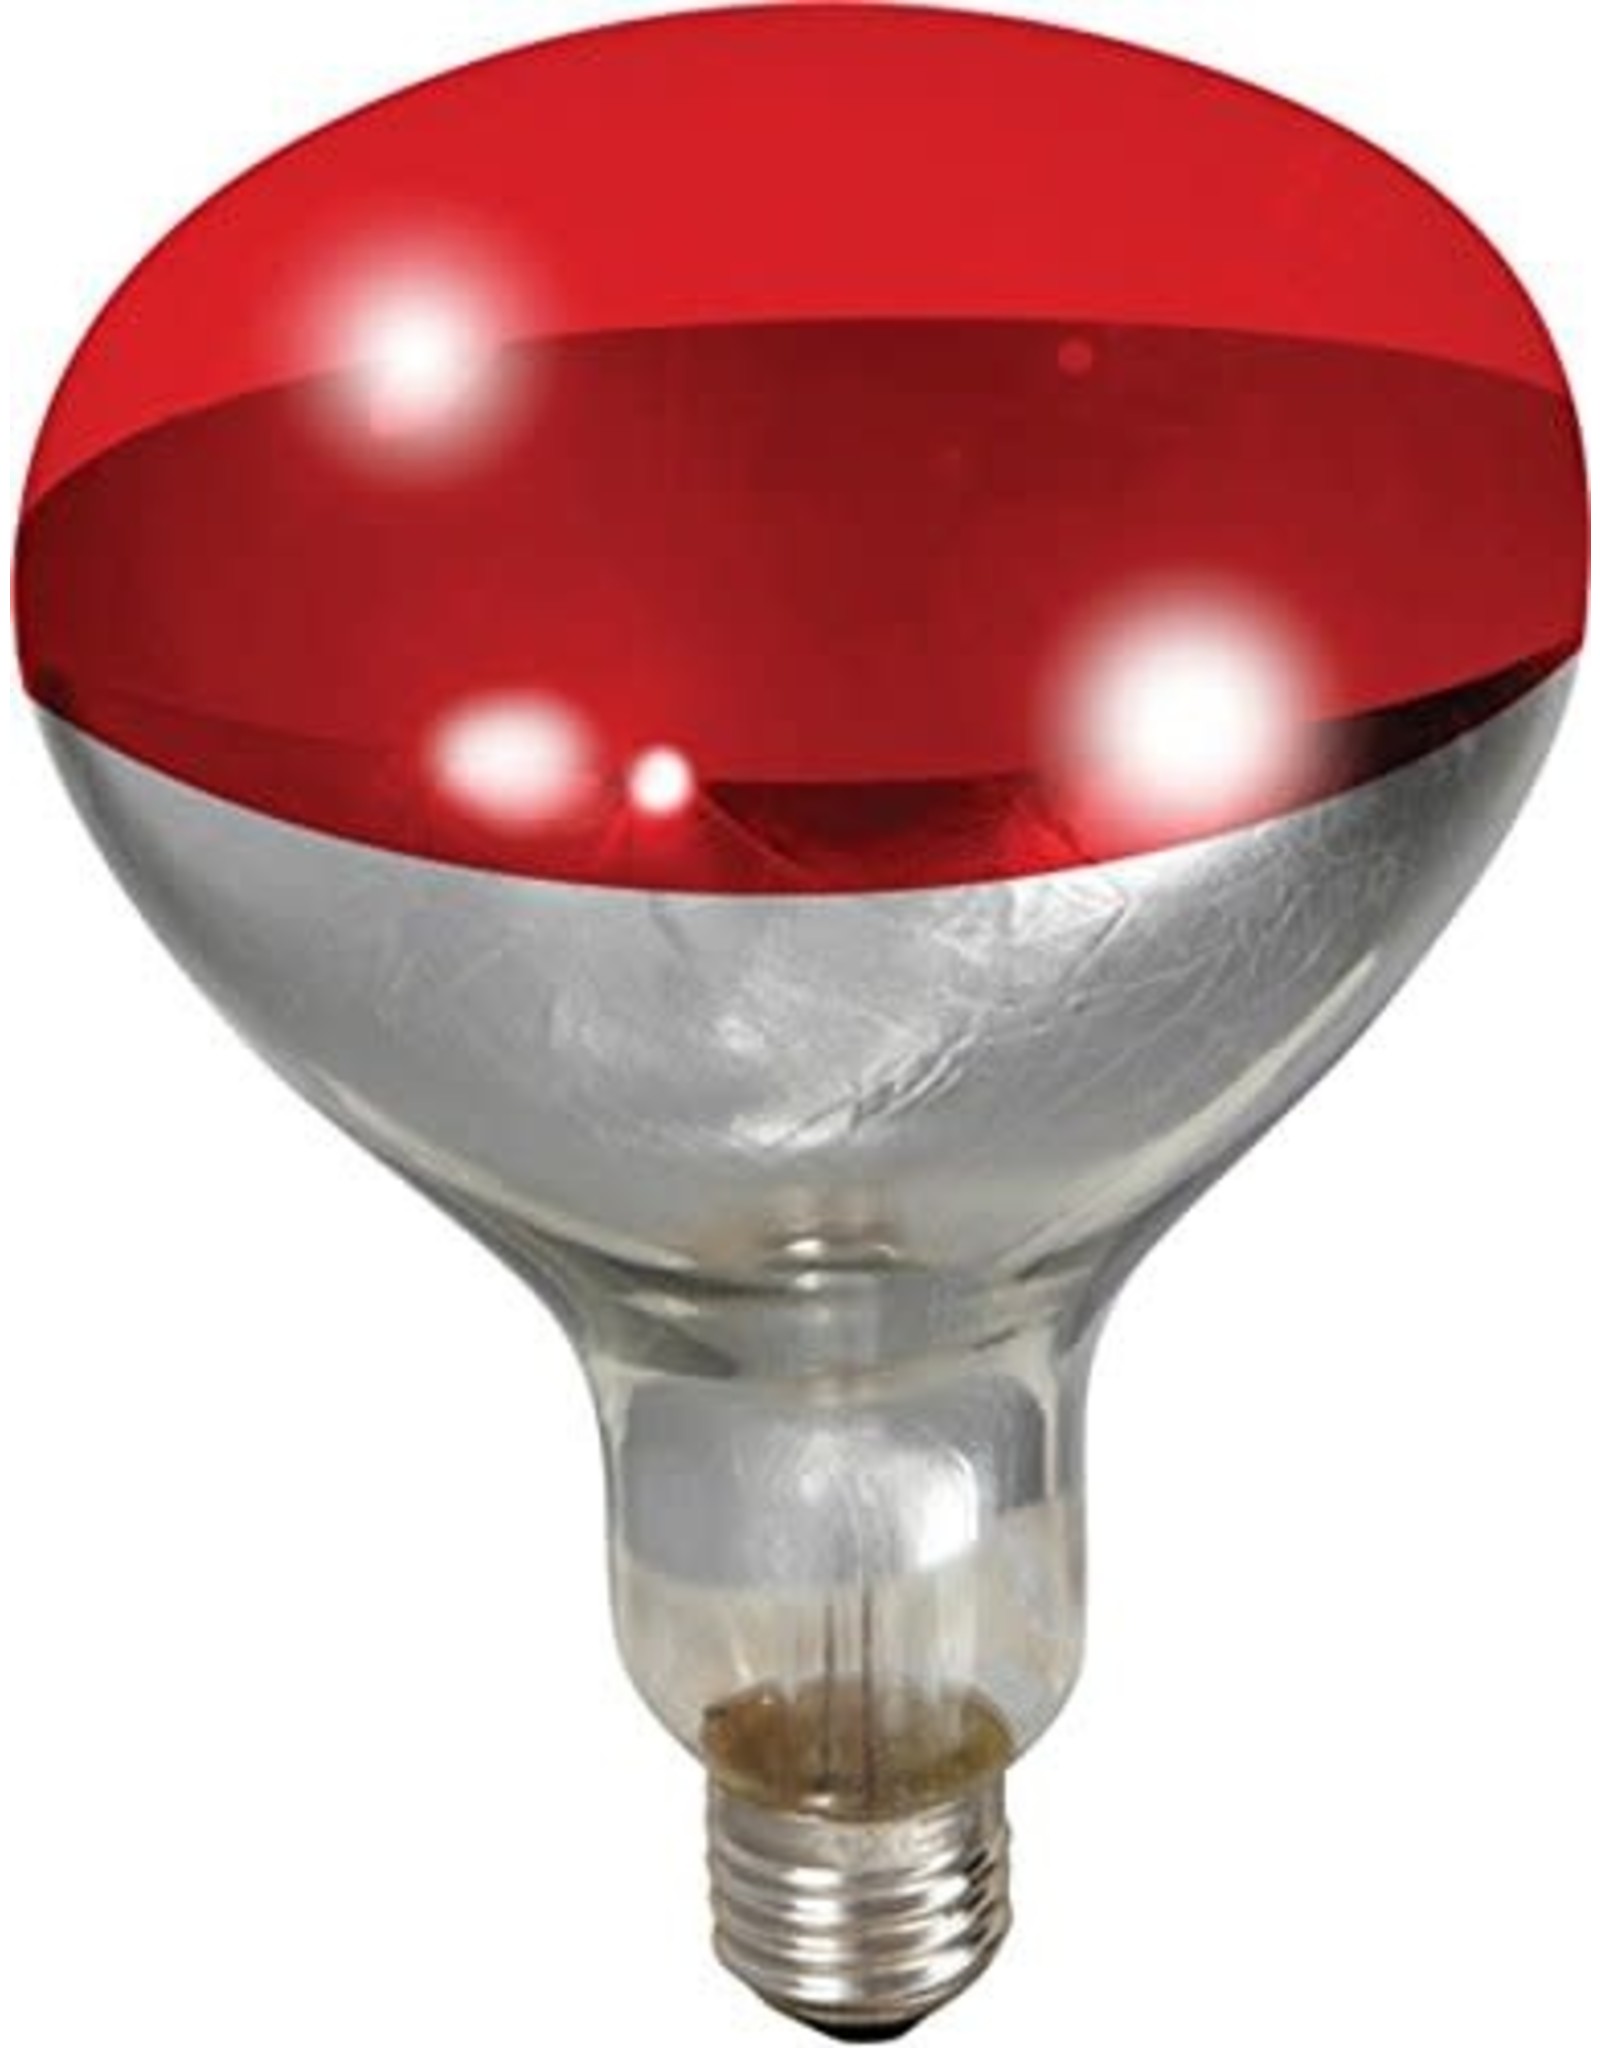 Little Giant Miller Heat Lamp Bulb Red 250W